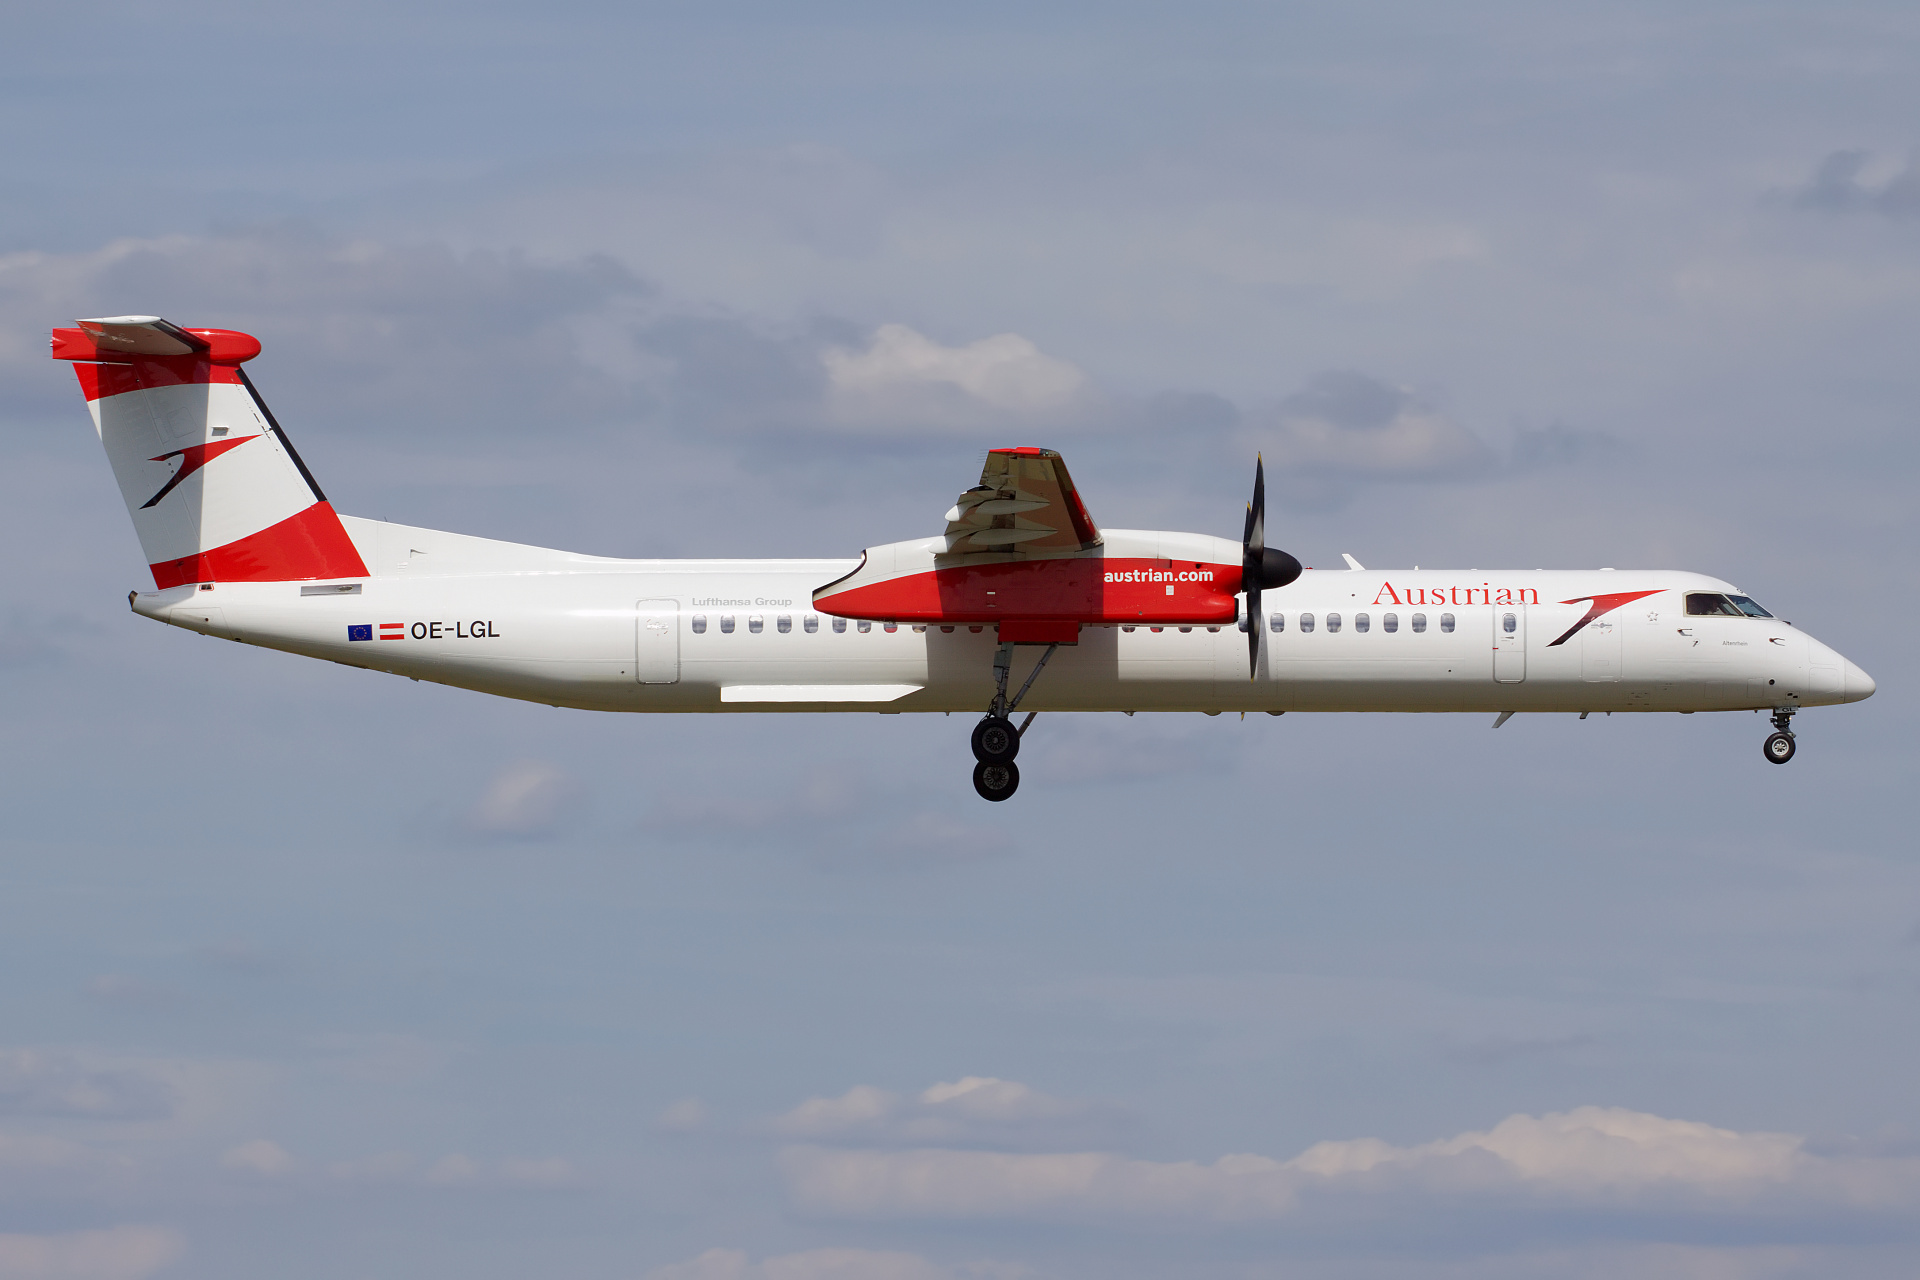 OE-LGL (Aircraft » EPWA Spotting » De Havilland Canada DHC-8 Dash 8 » Austrian Airlines)